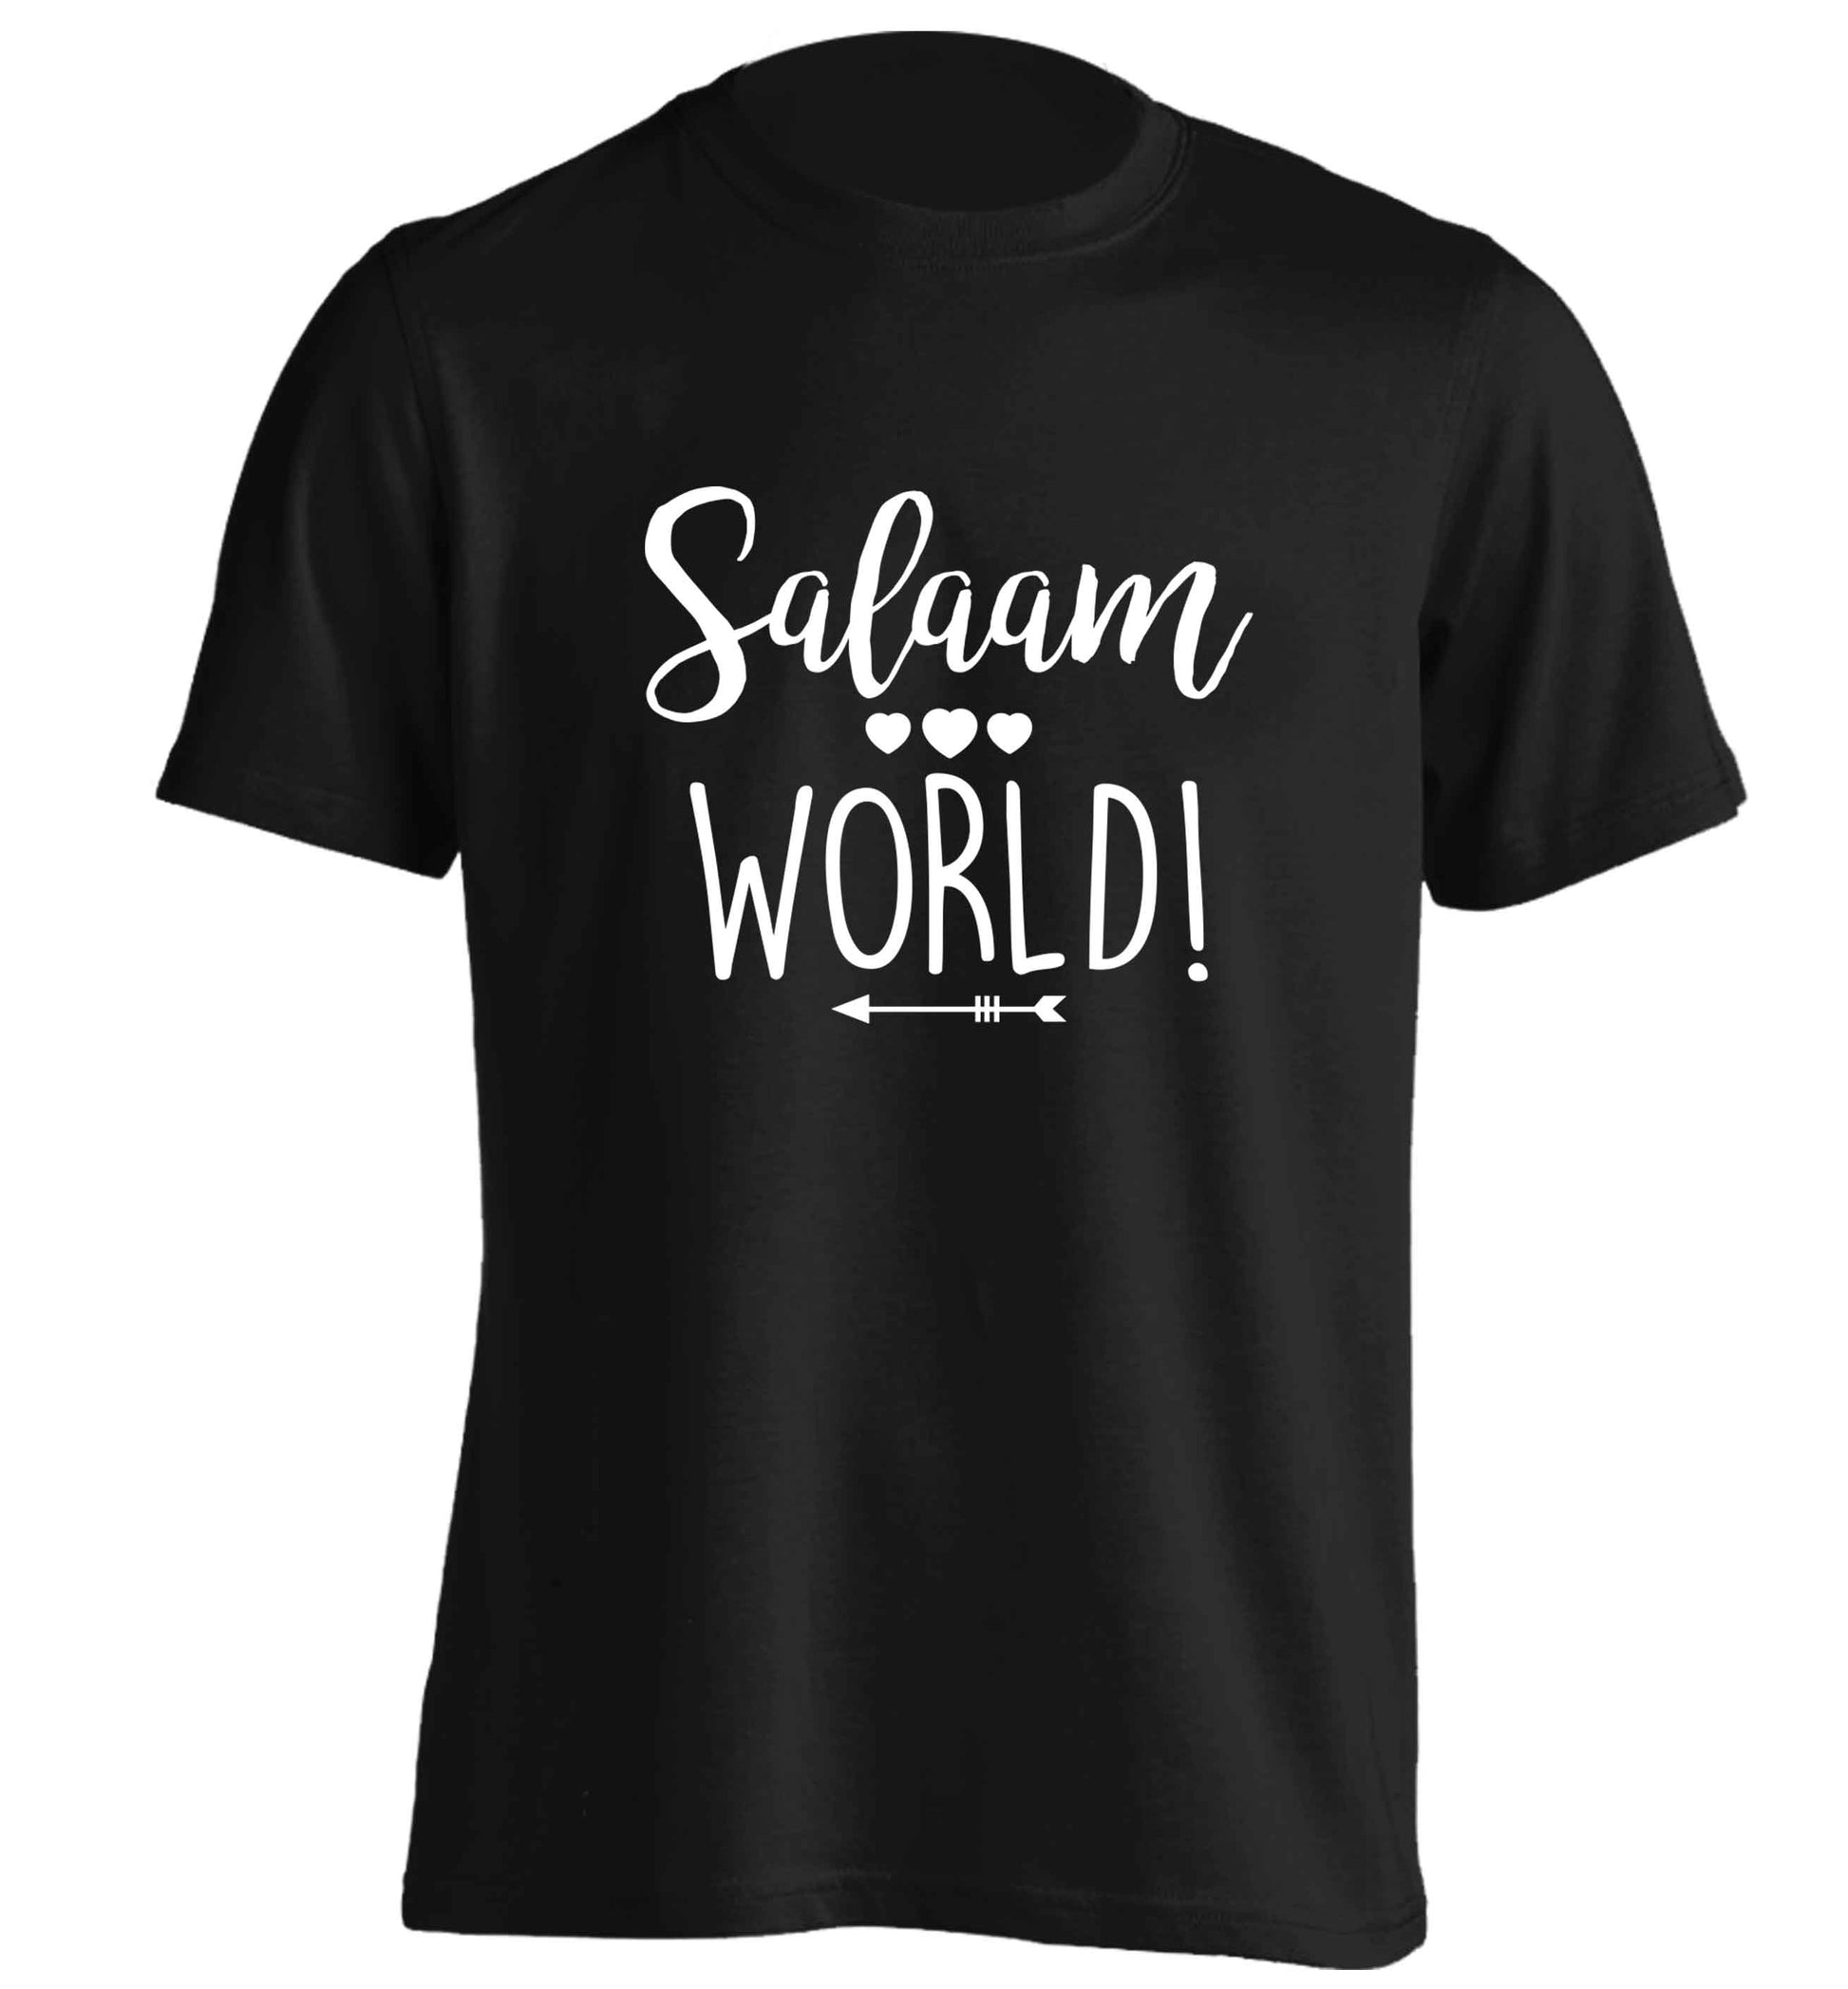 Salaam world adults unisex black Tshirt 2XL